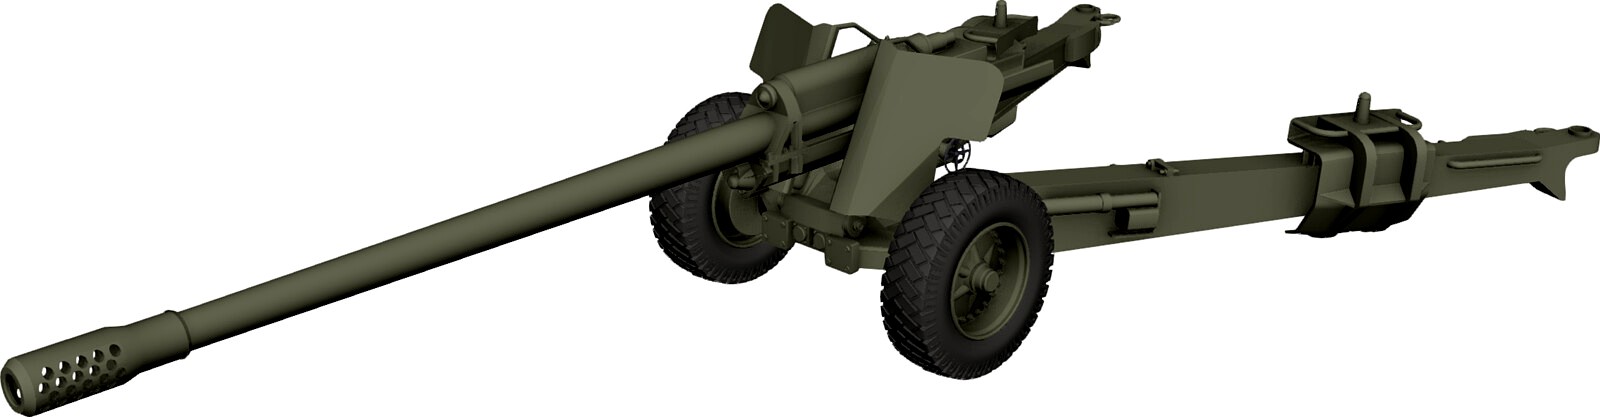 M-46 Field Cannon